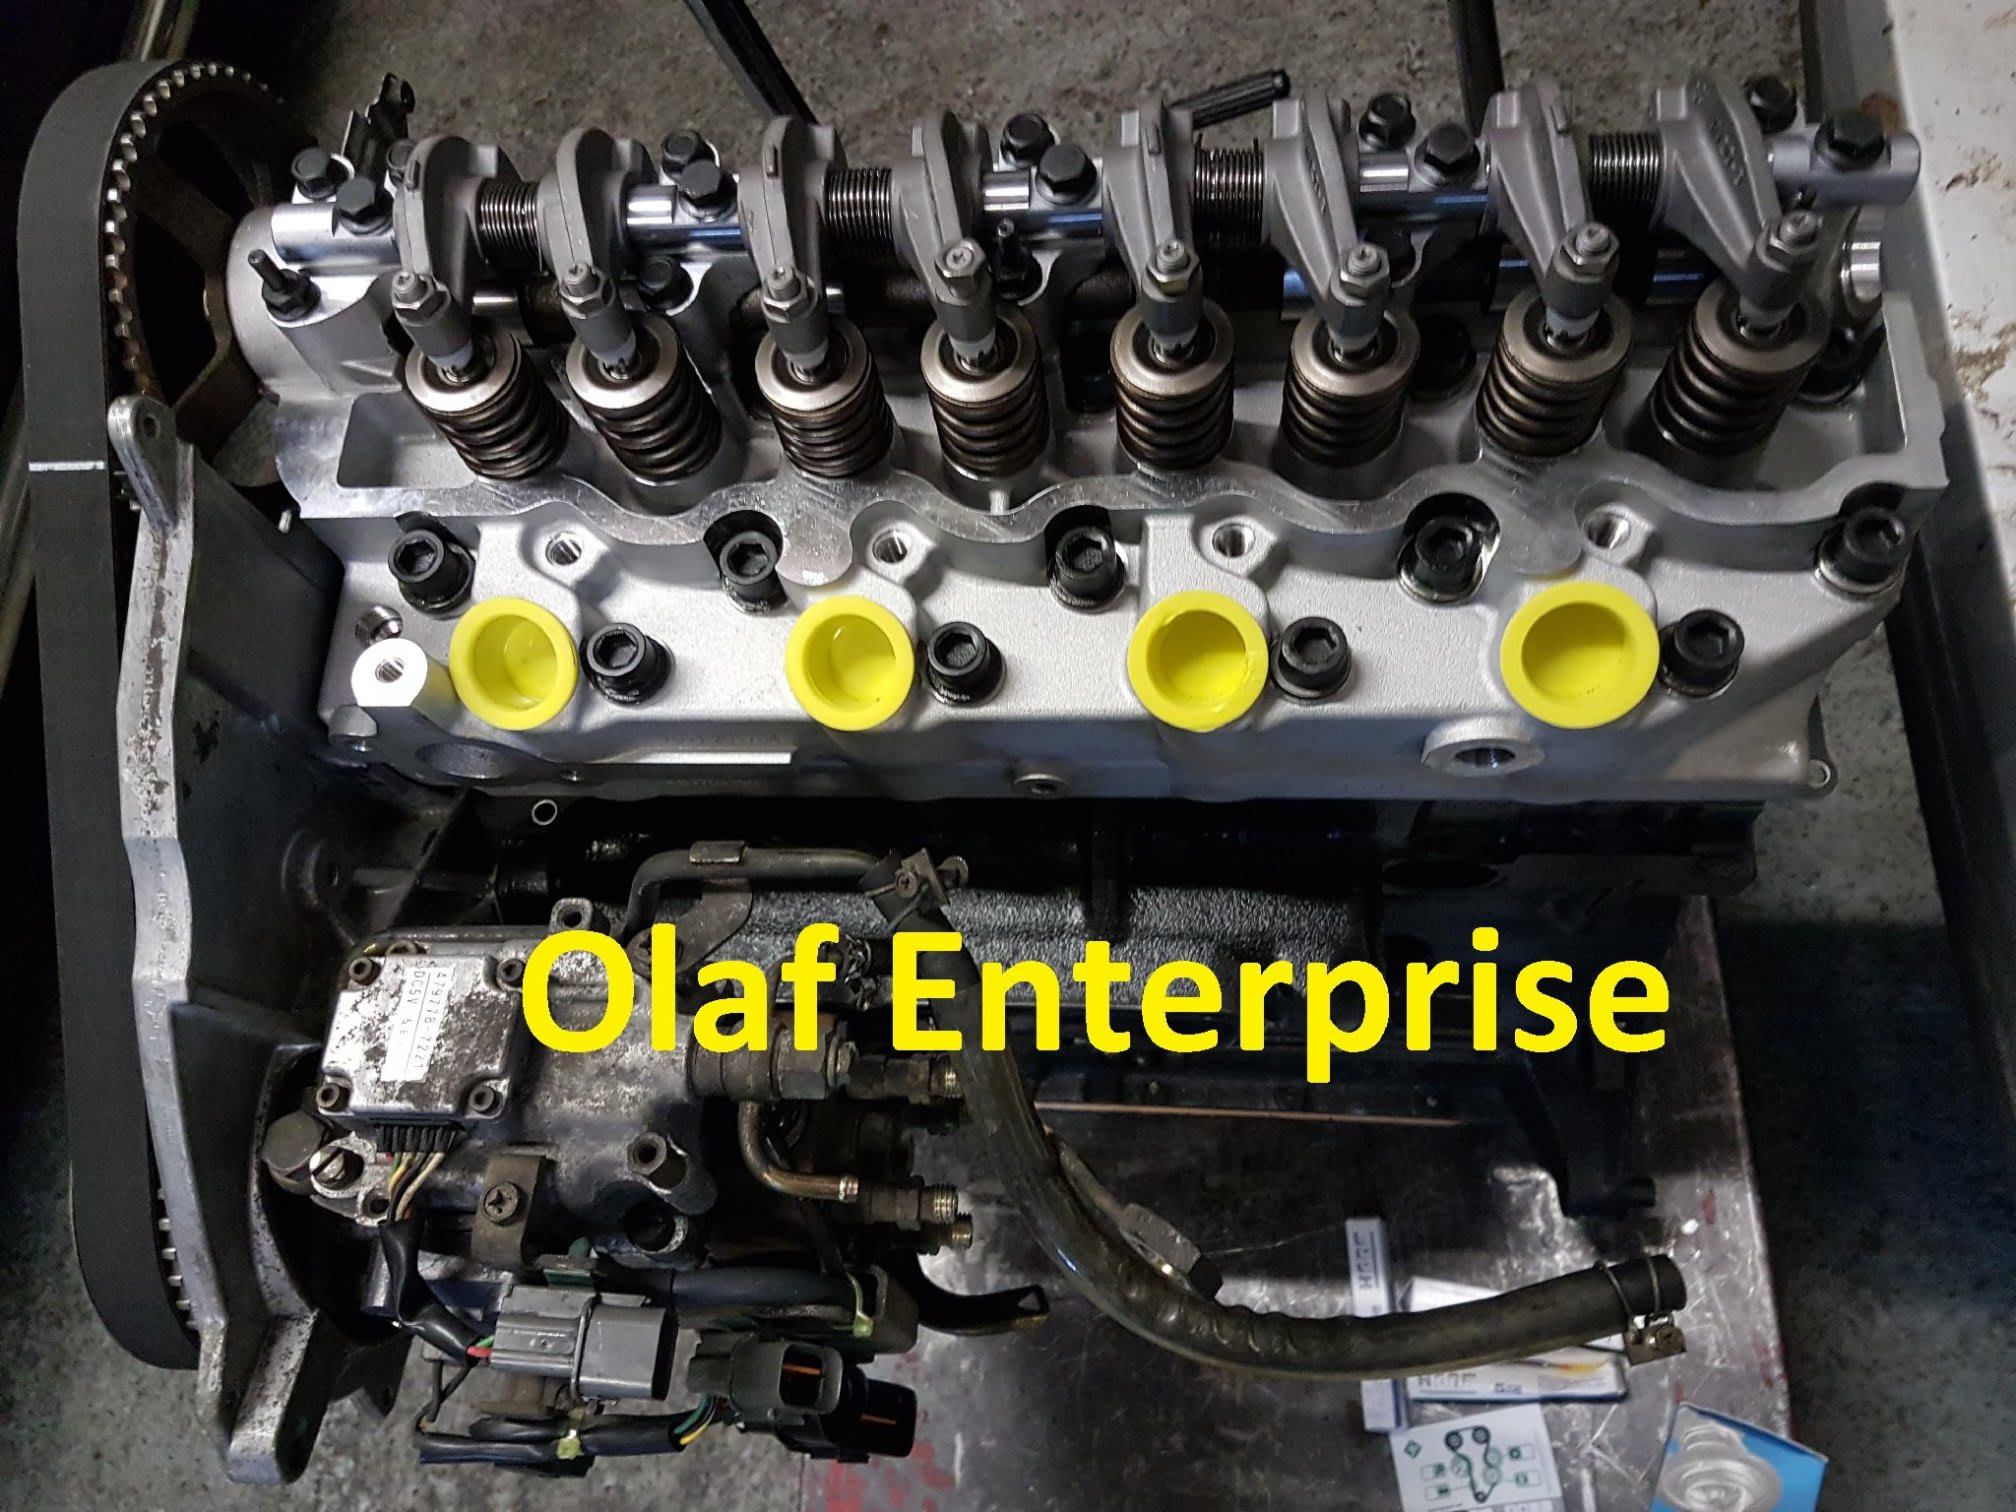 Olaf Enterprise Ltd Greenford 01494 422125